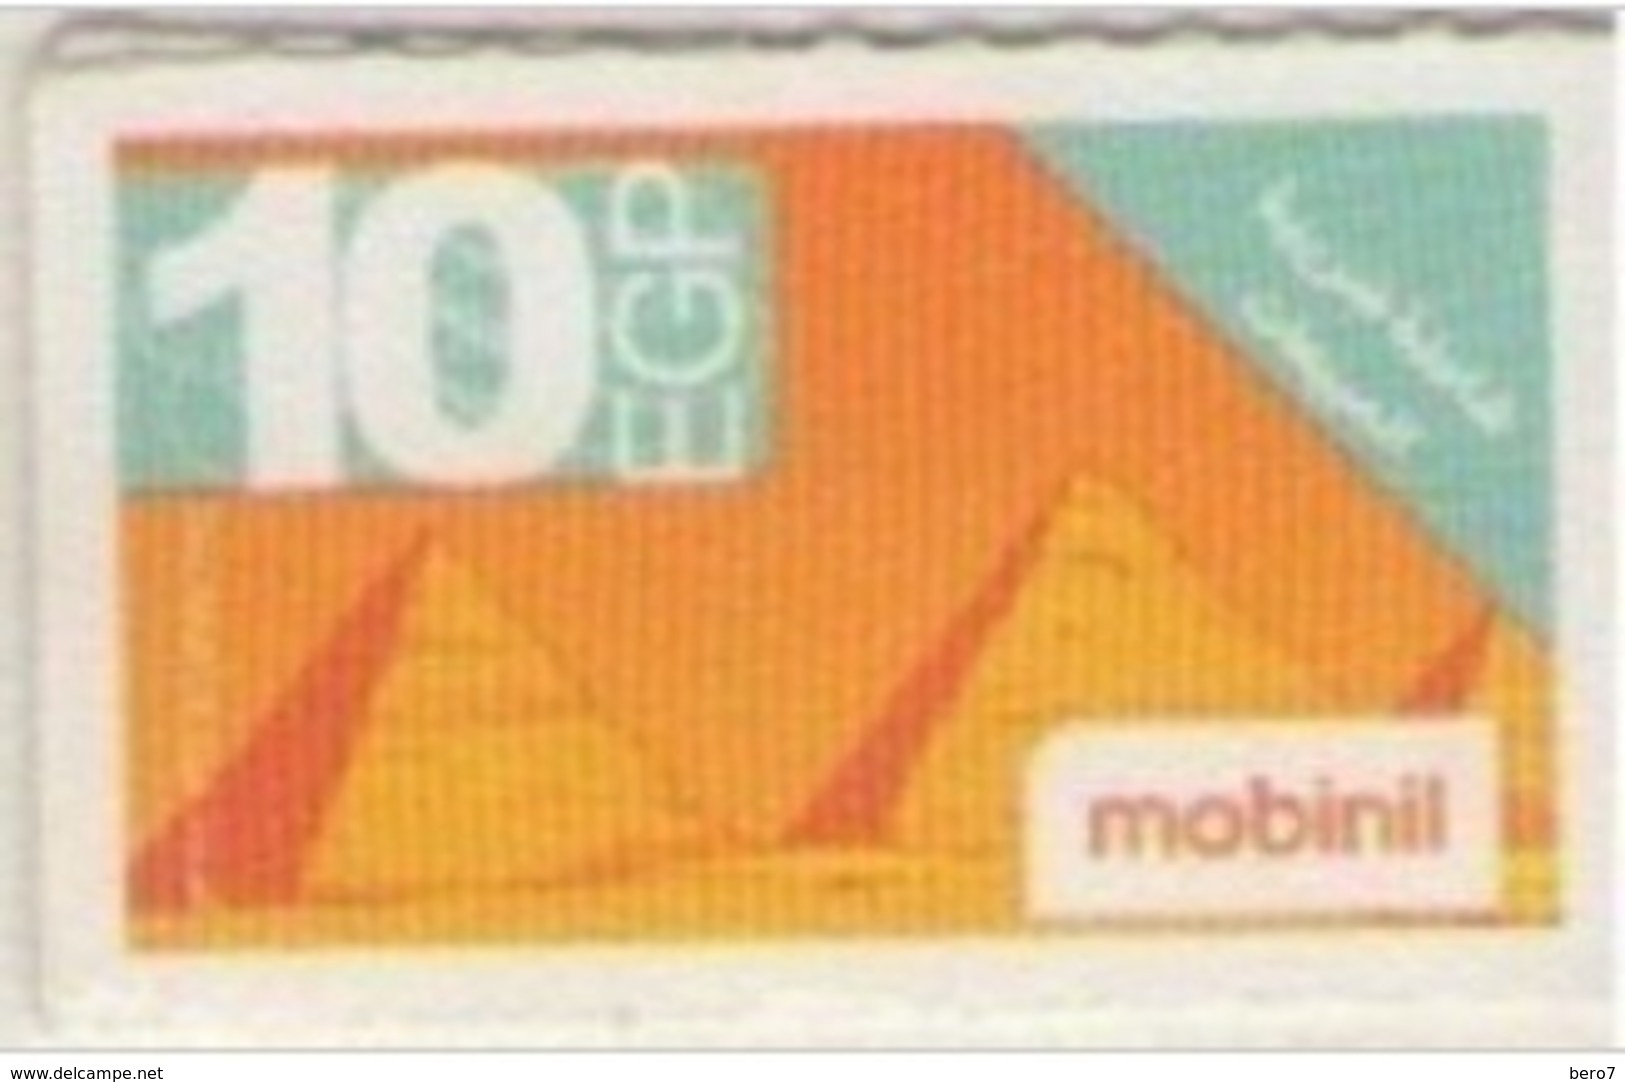 EGYPT Pyramids - MobiNil Prepaid Card 10 L.E, [USED] (Egypte) (Egitto) (Ägypten) (Egipto) (Egypten) - Egypte